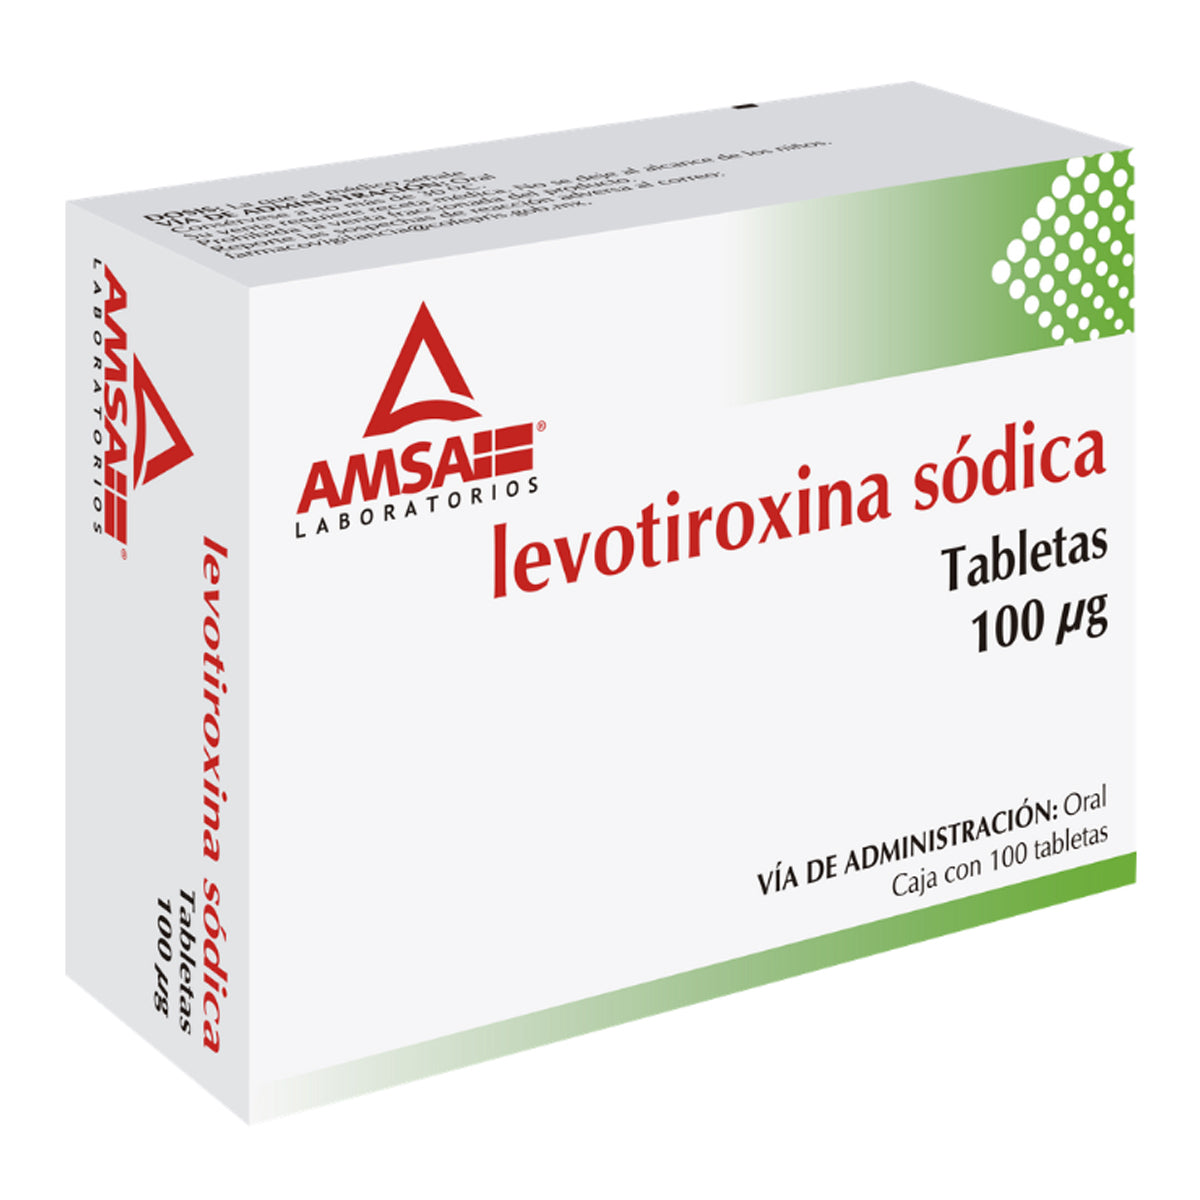 Levotiroxina sodica 100mcg oral, 100 tabletas. Marca AMSA